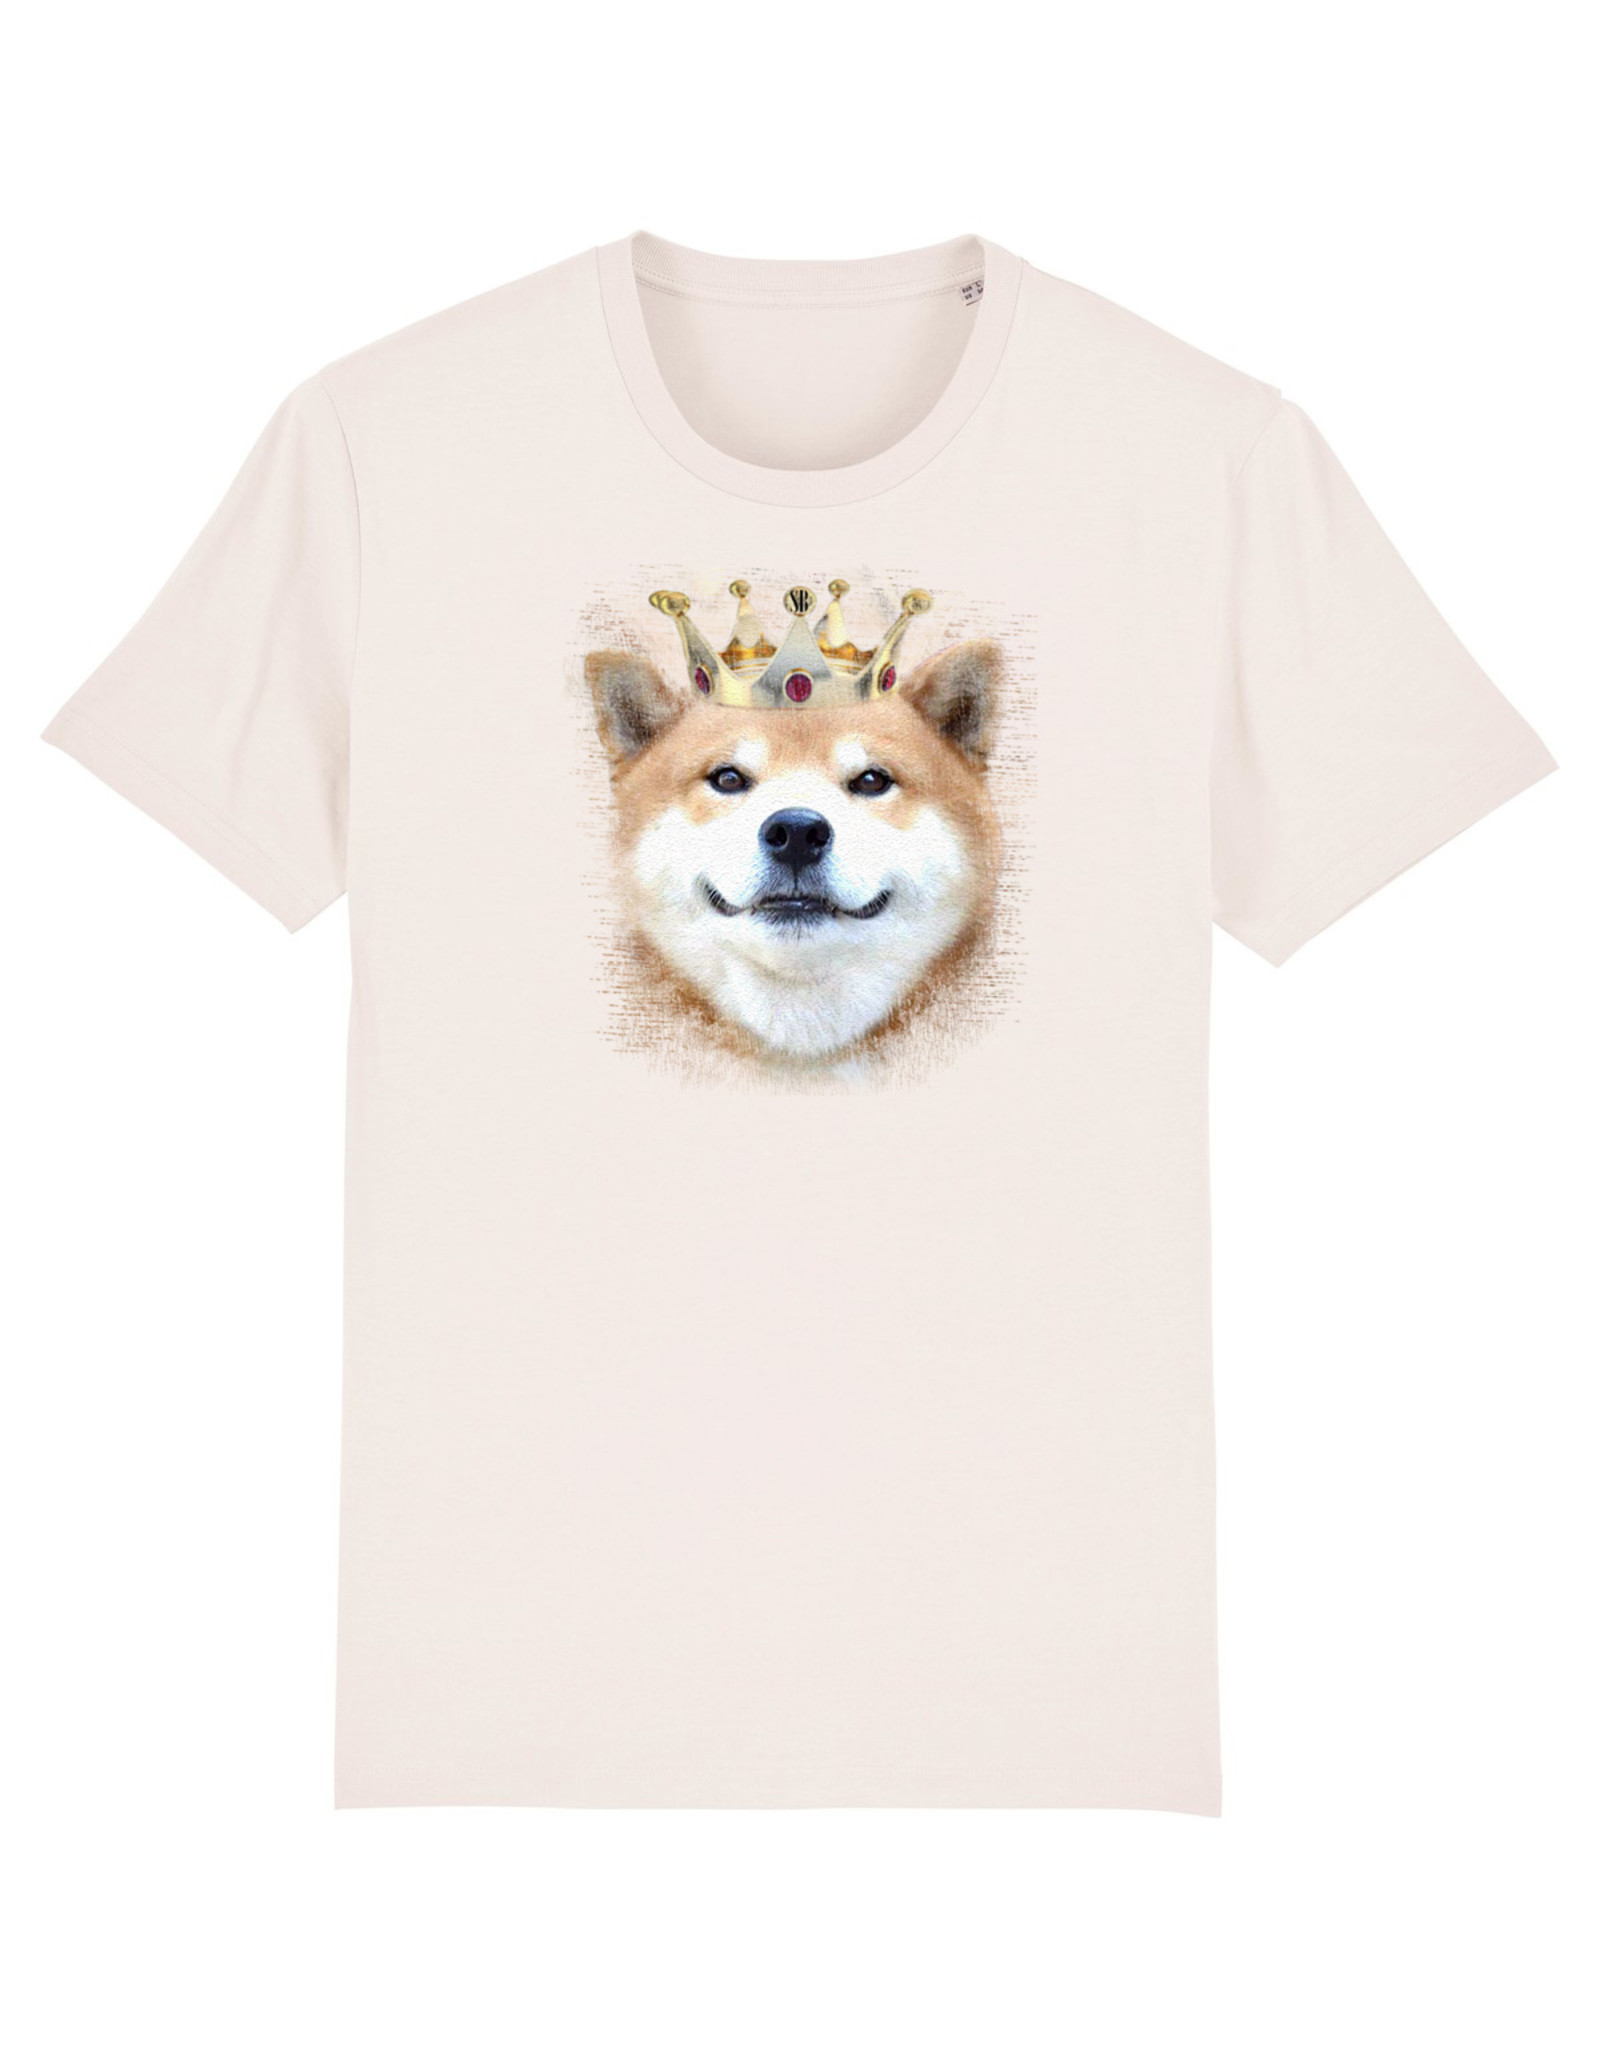 Shiba Boutique - Shiba Inu Dog King T-Shirt Men